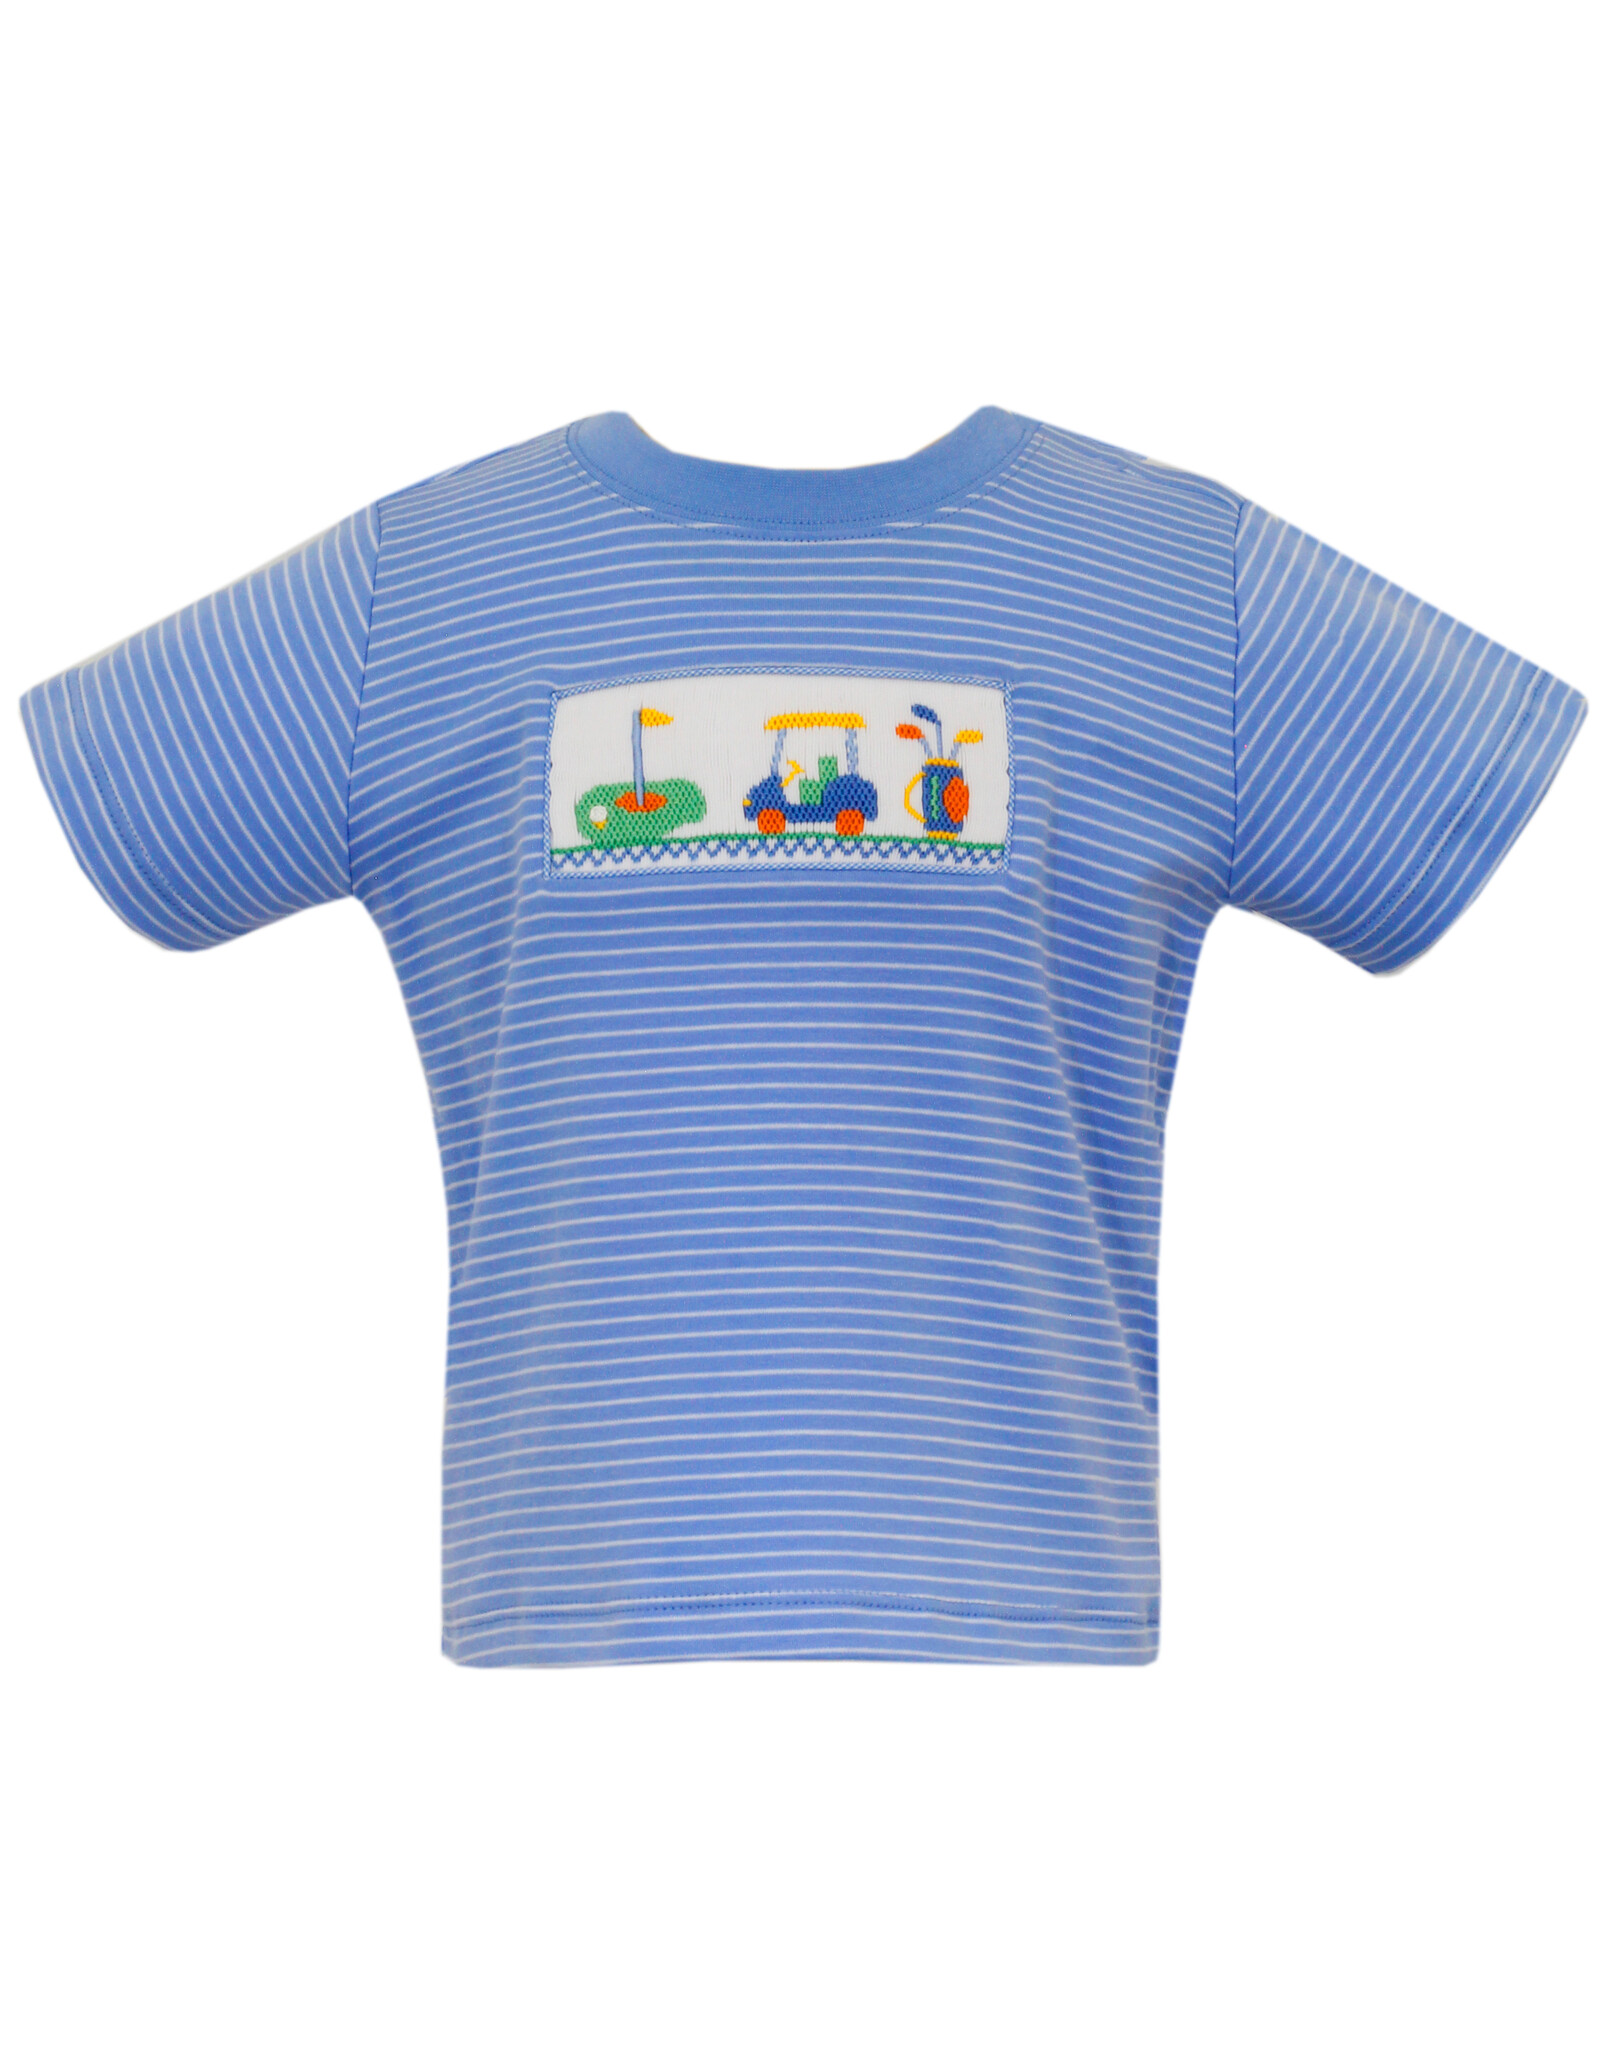 Anavini Golf Boy's T-shirt